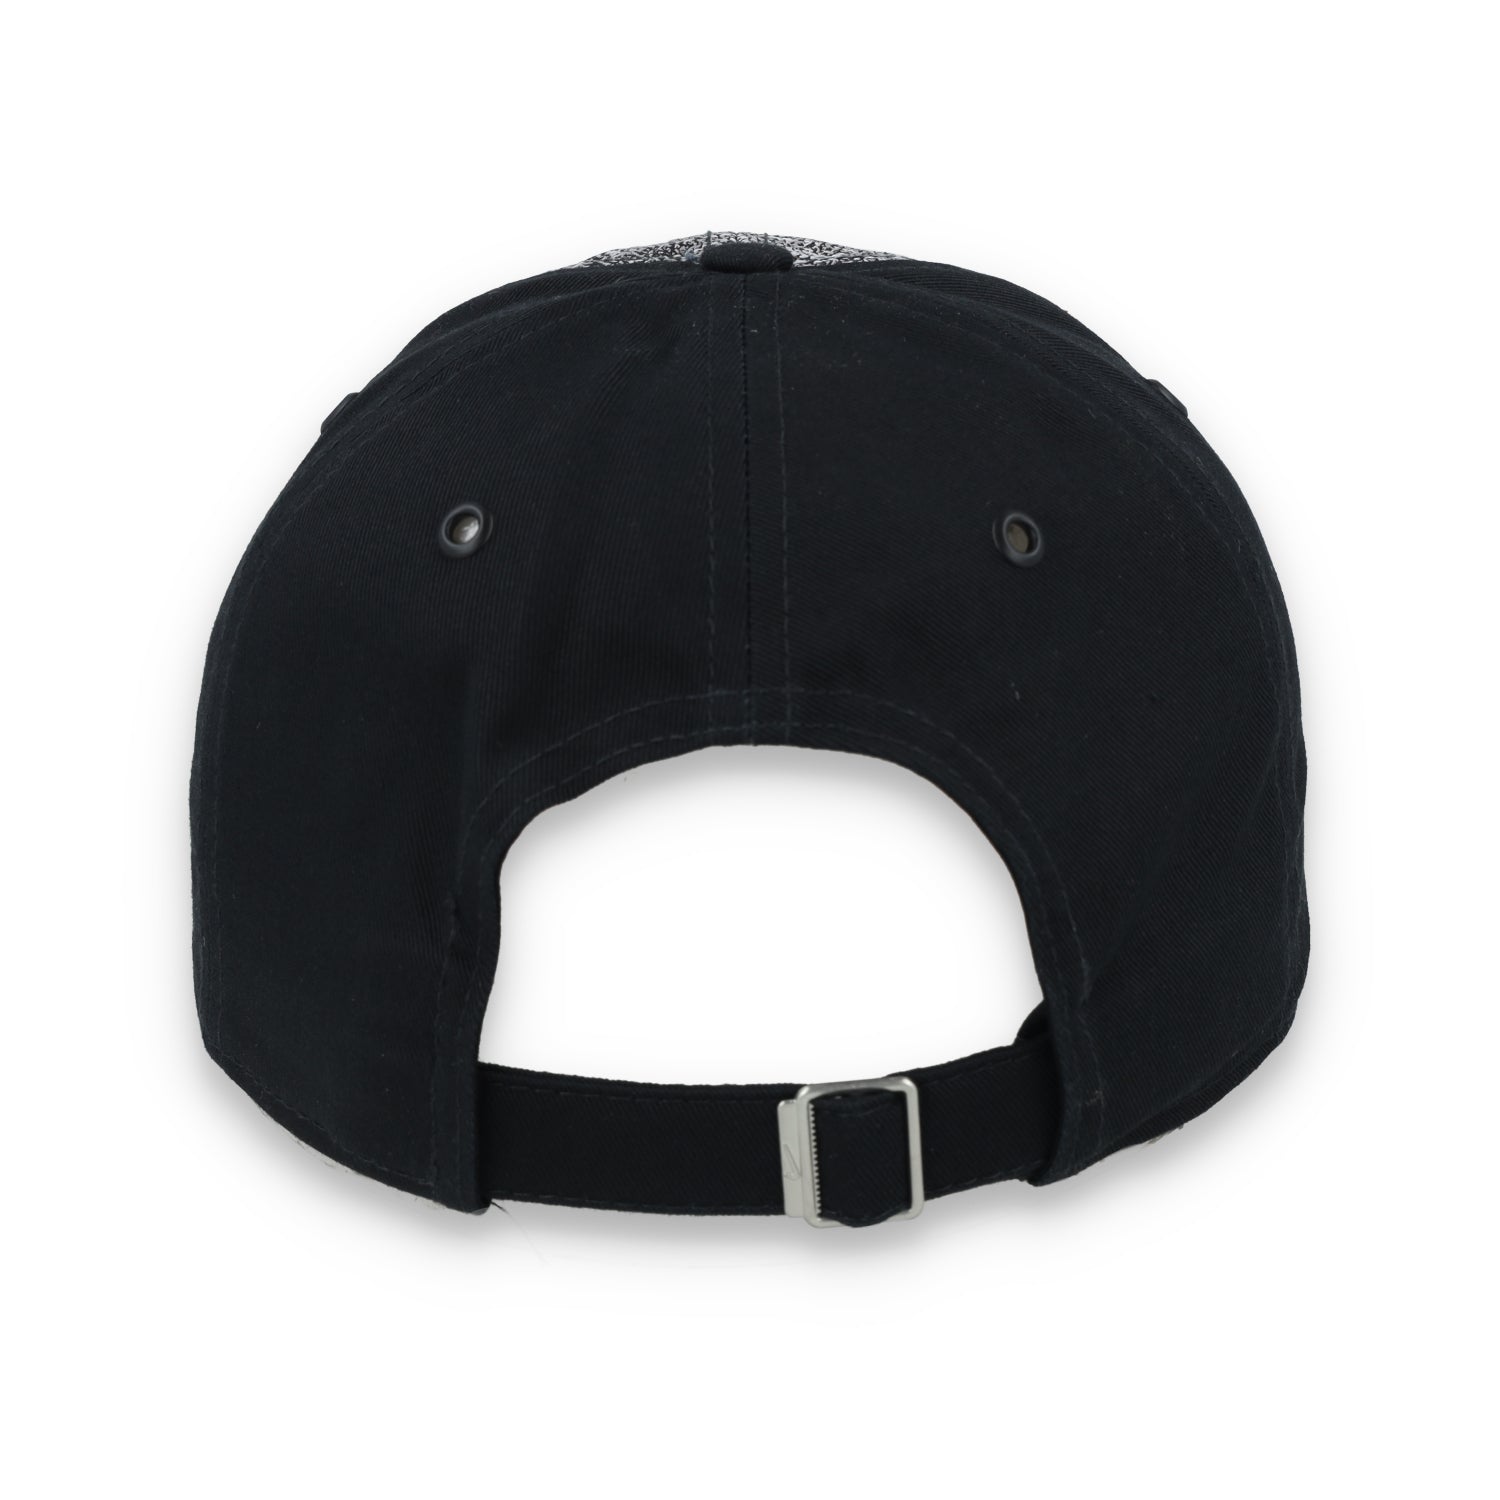 Nike San Francisco Giants Day Heritage 86 Adjustable Hat-Black